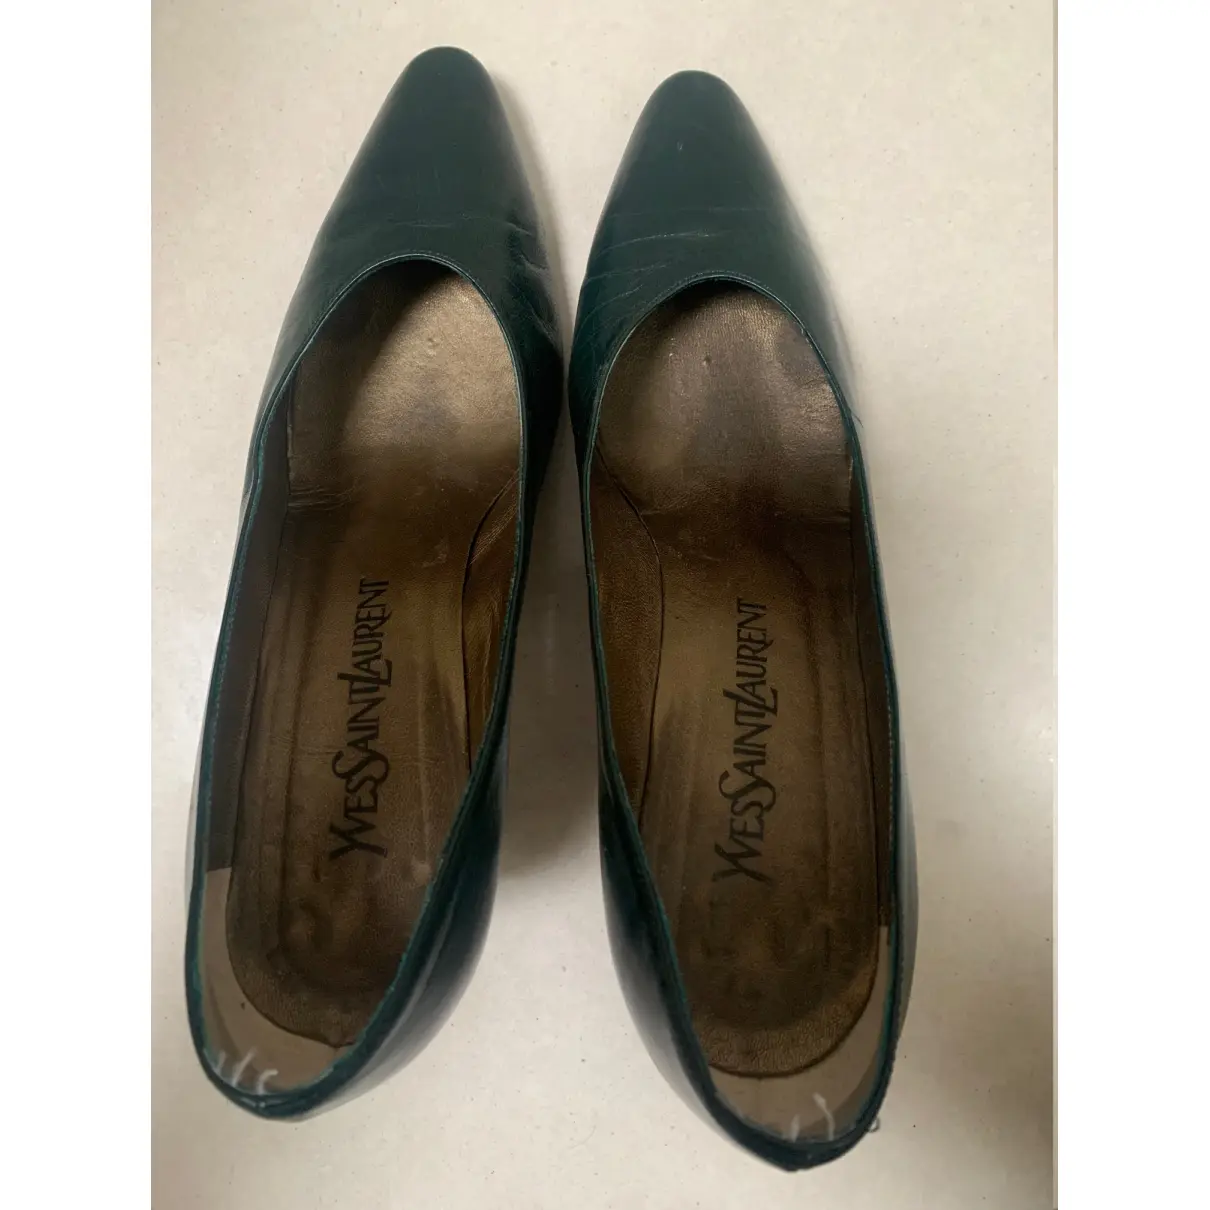 Leather heels Yves Saint Laurent - Vintage